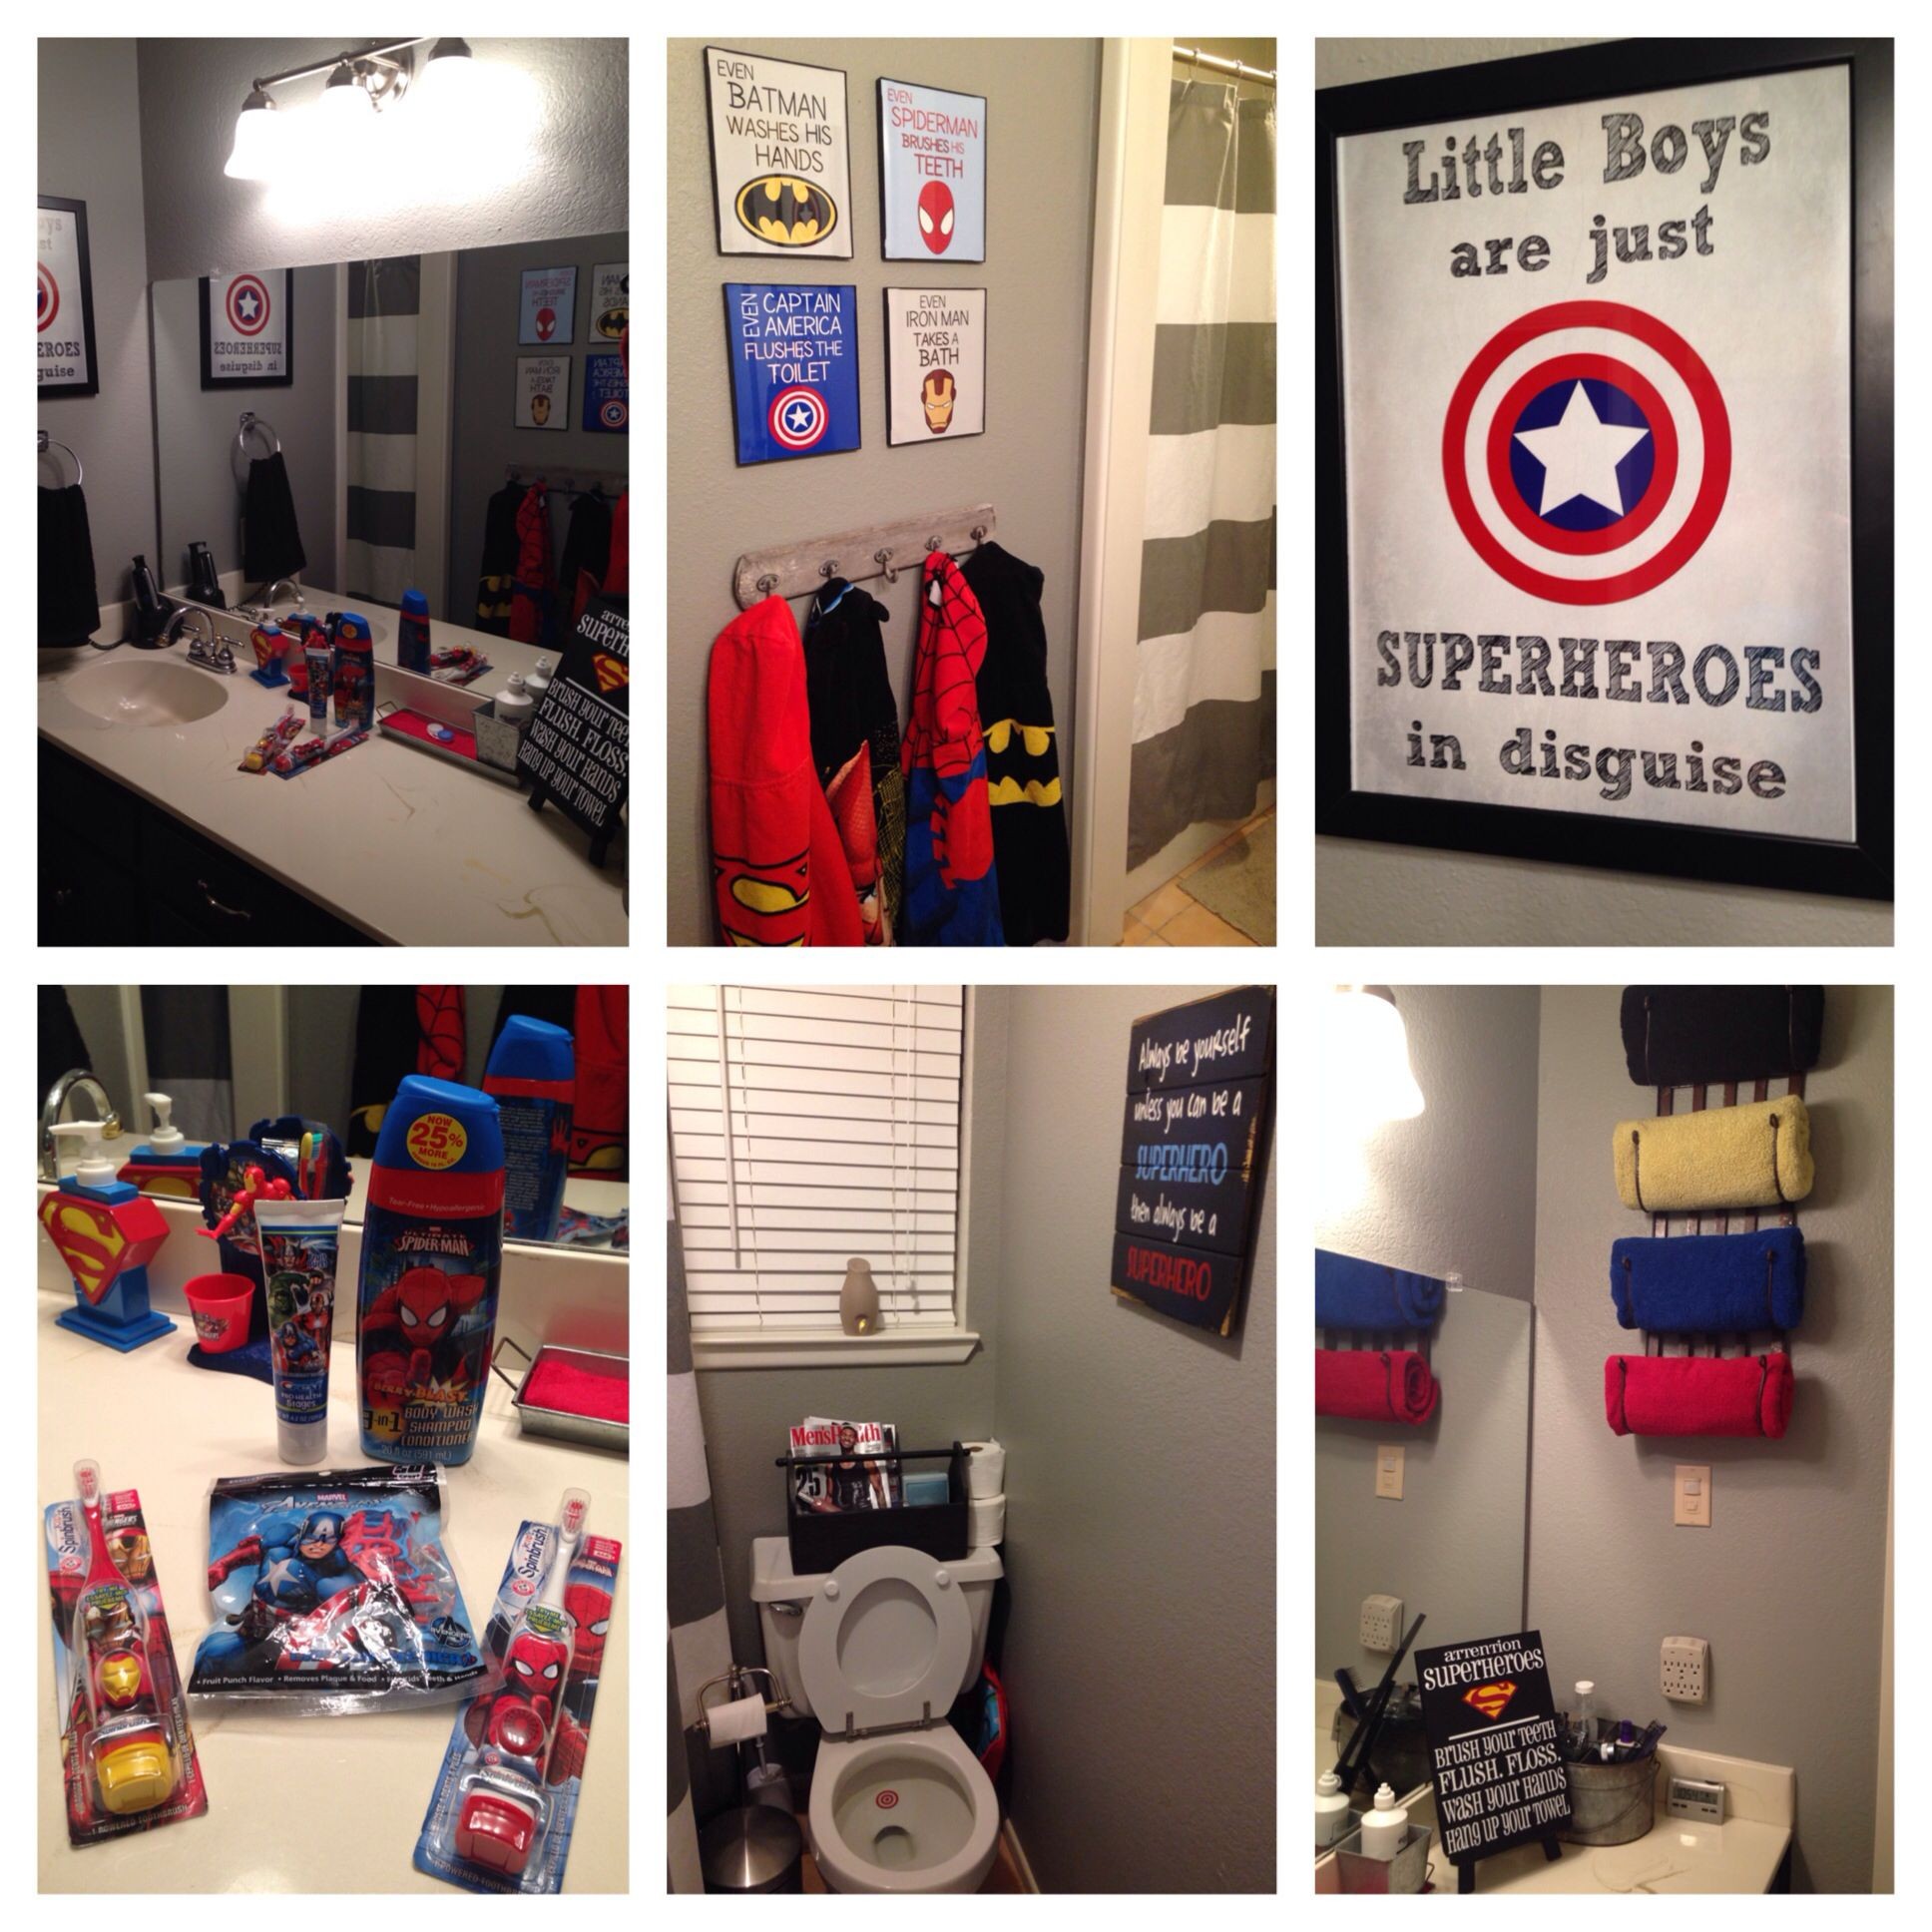 Marvel Bathroom Decor
 Superhero Bathroom Consists of items from Etsy West Elm